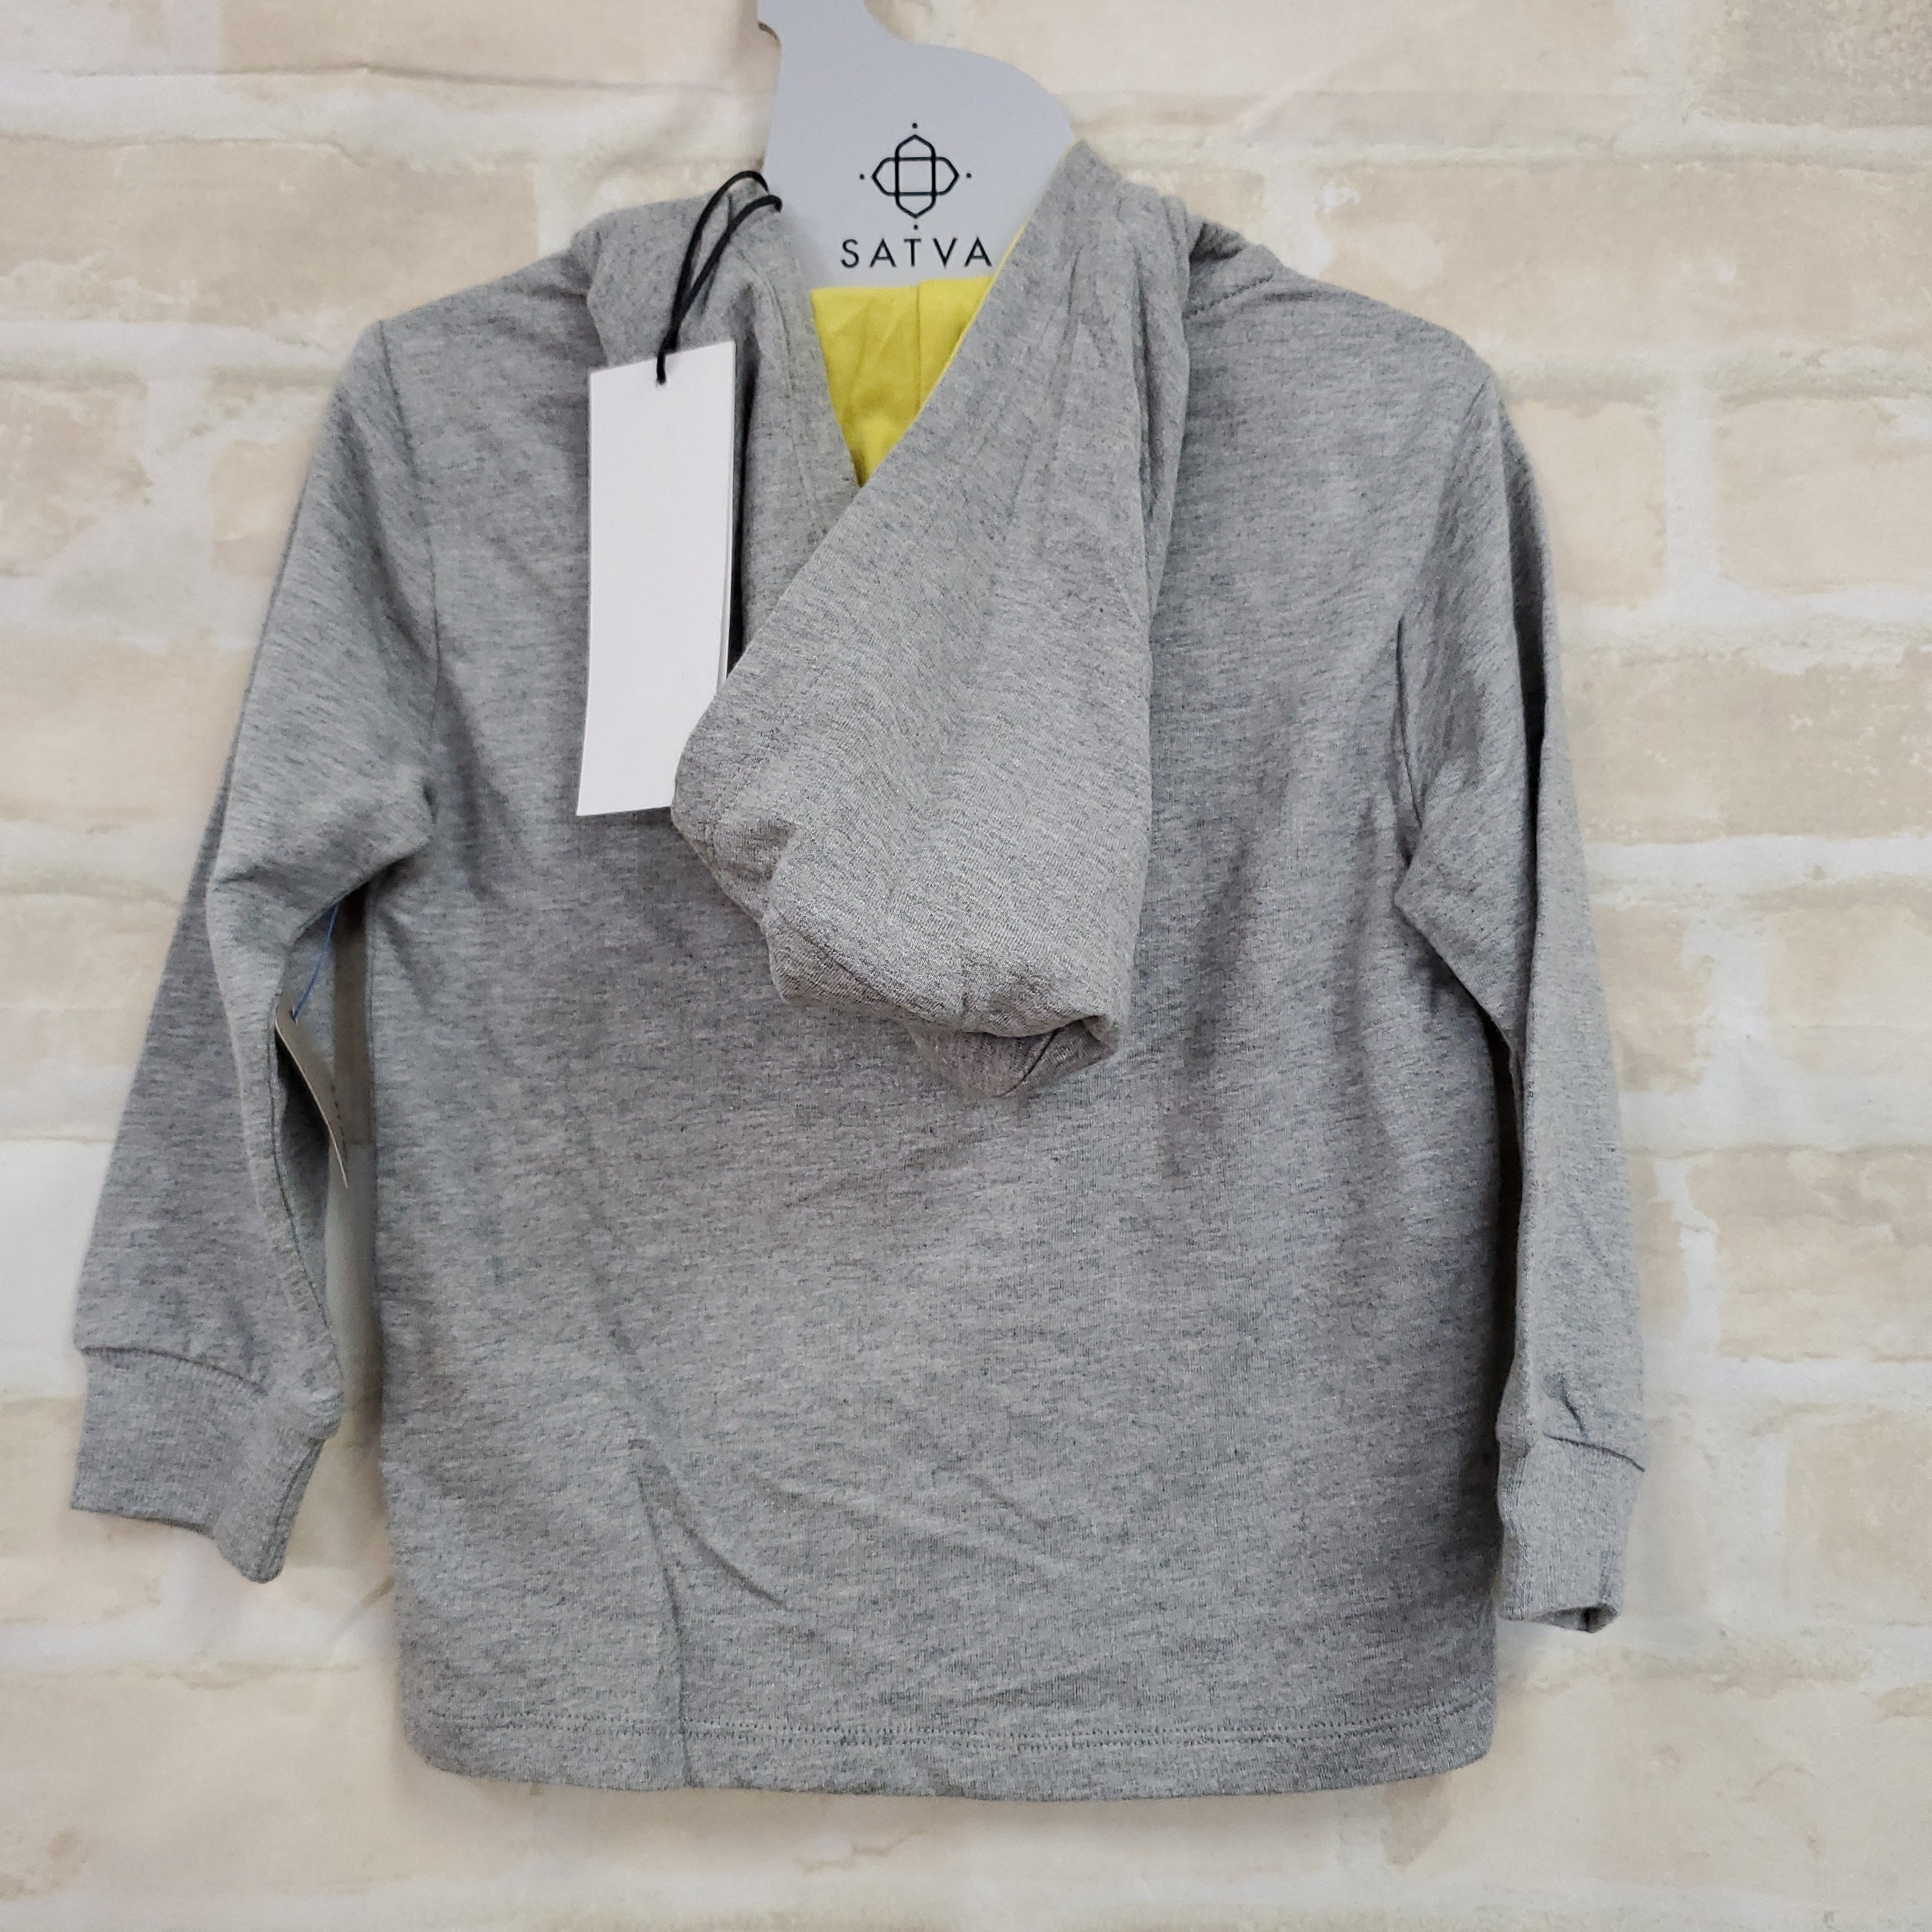 Satva New boy/girl jacket gray/yellow organic cotton zips hooded 3T